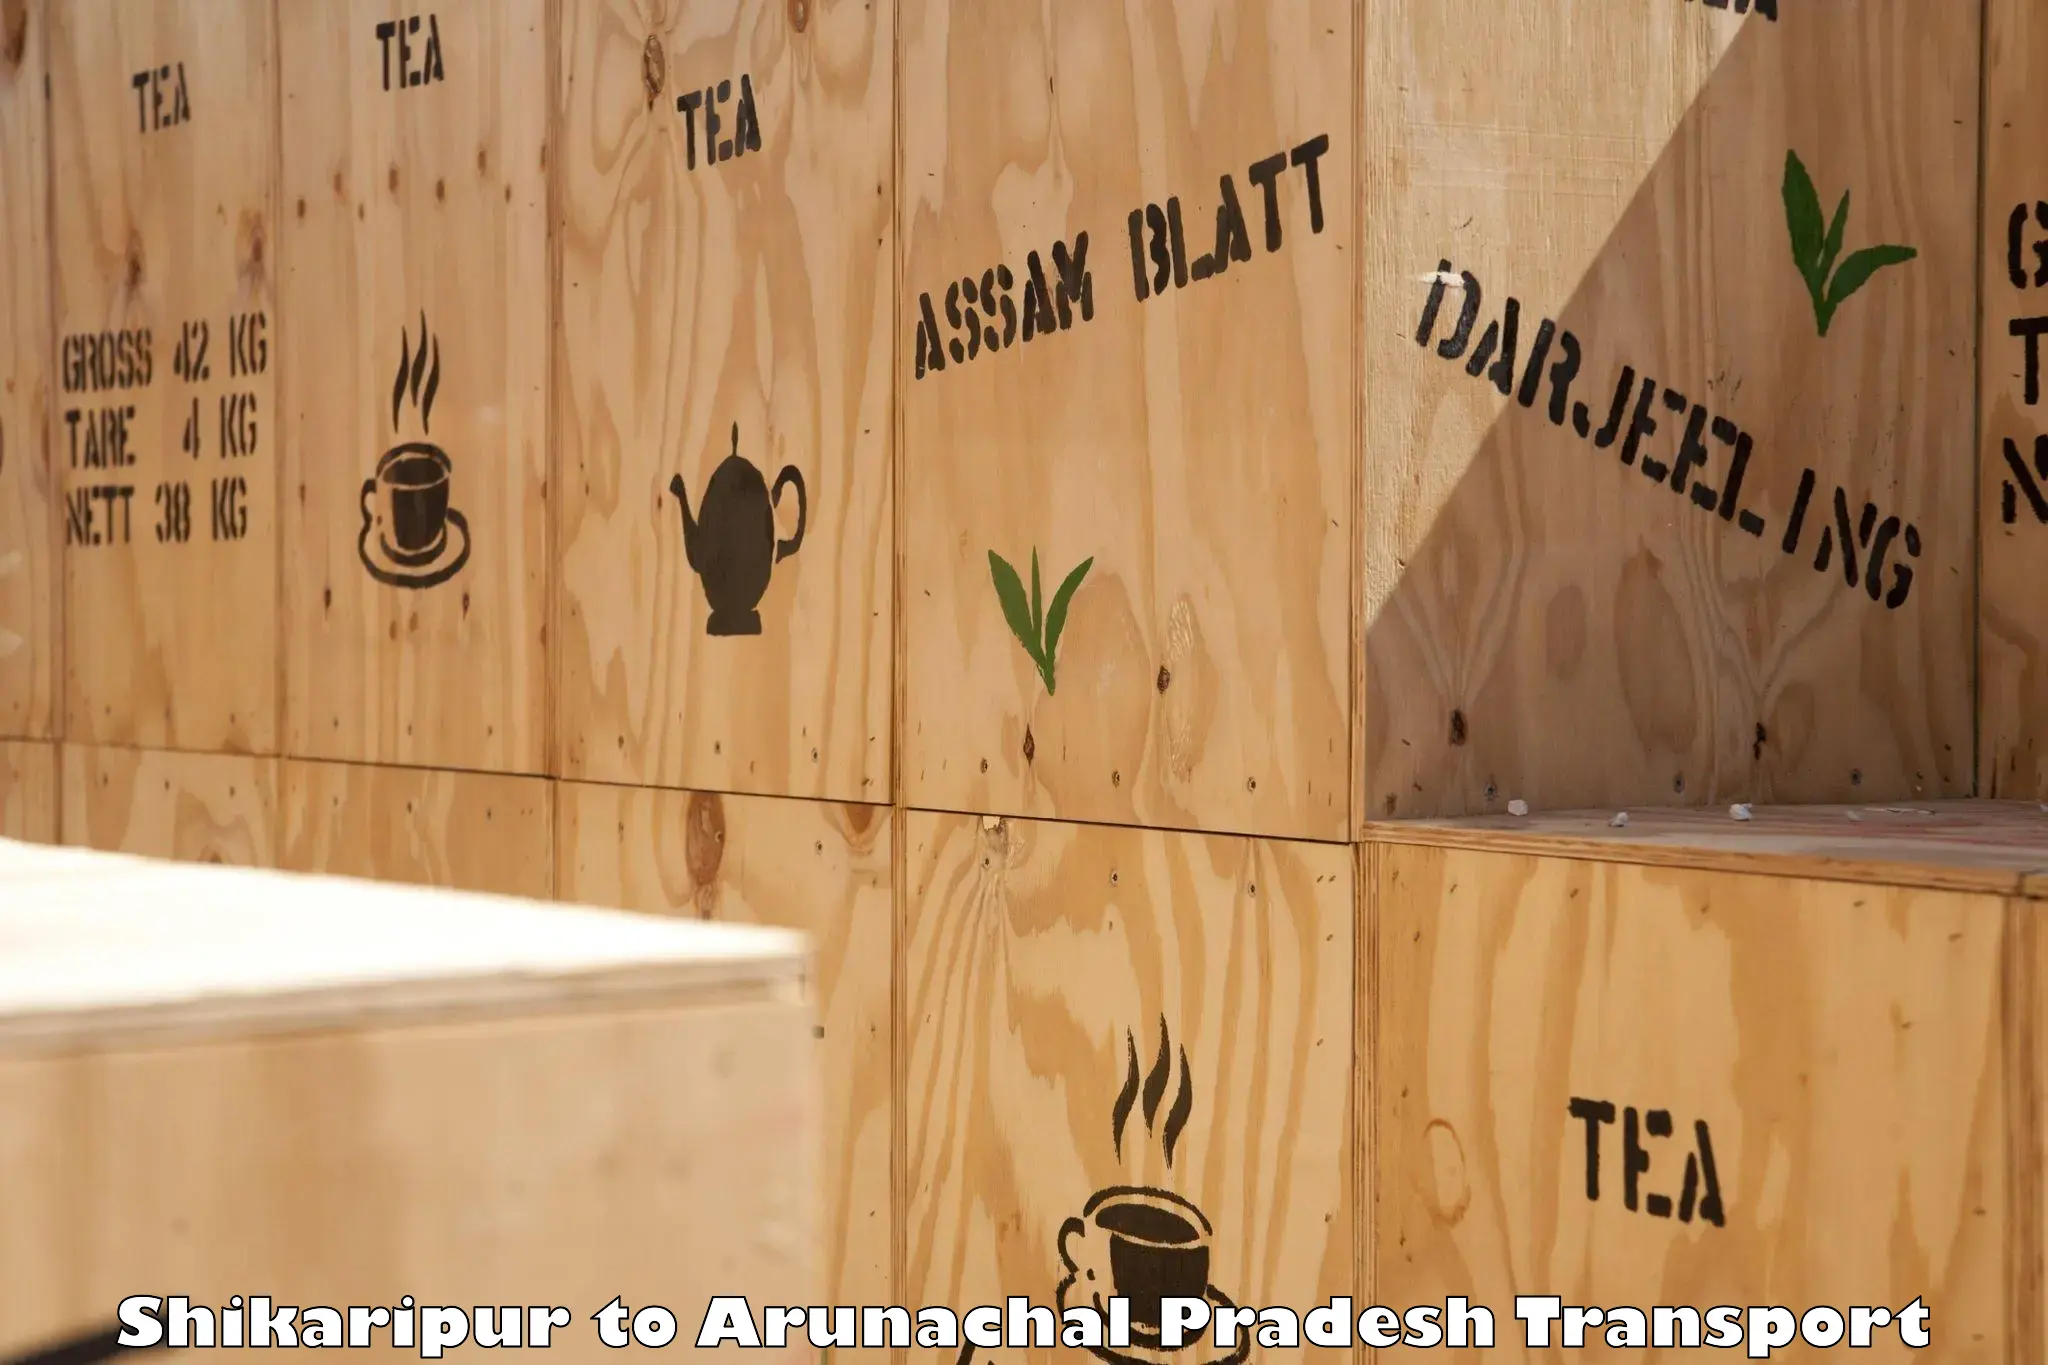 Container transport service Shikaripur to Arunachal Pradesh